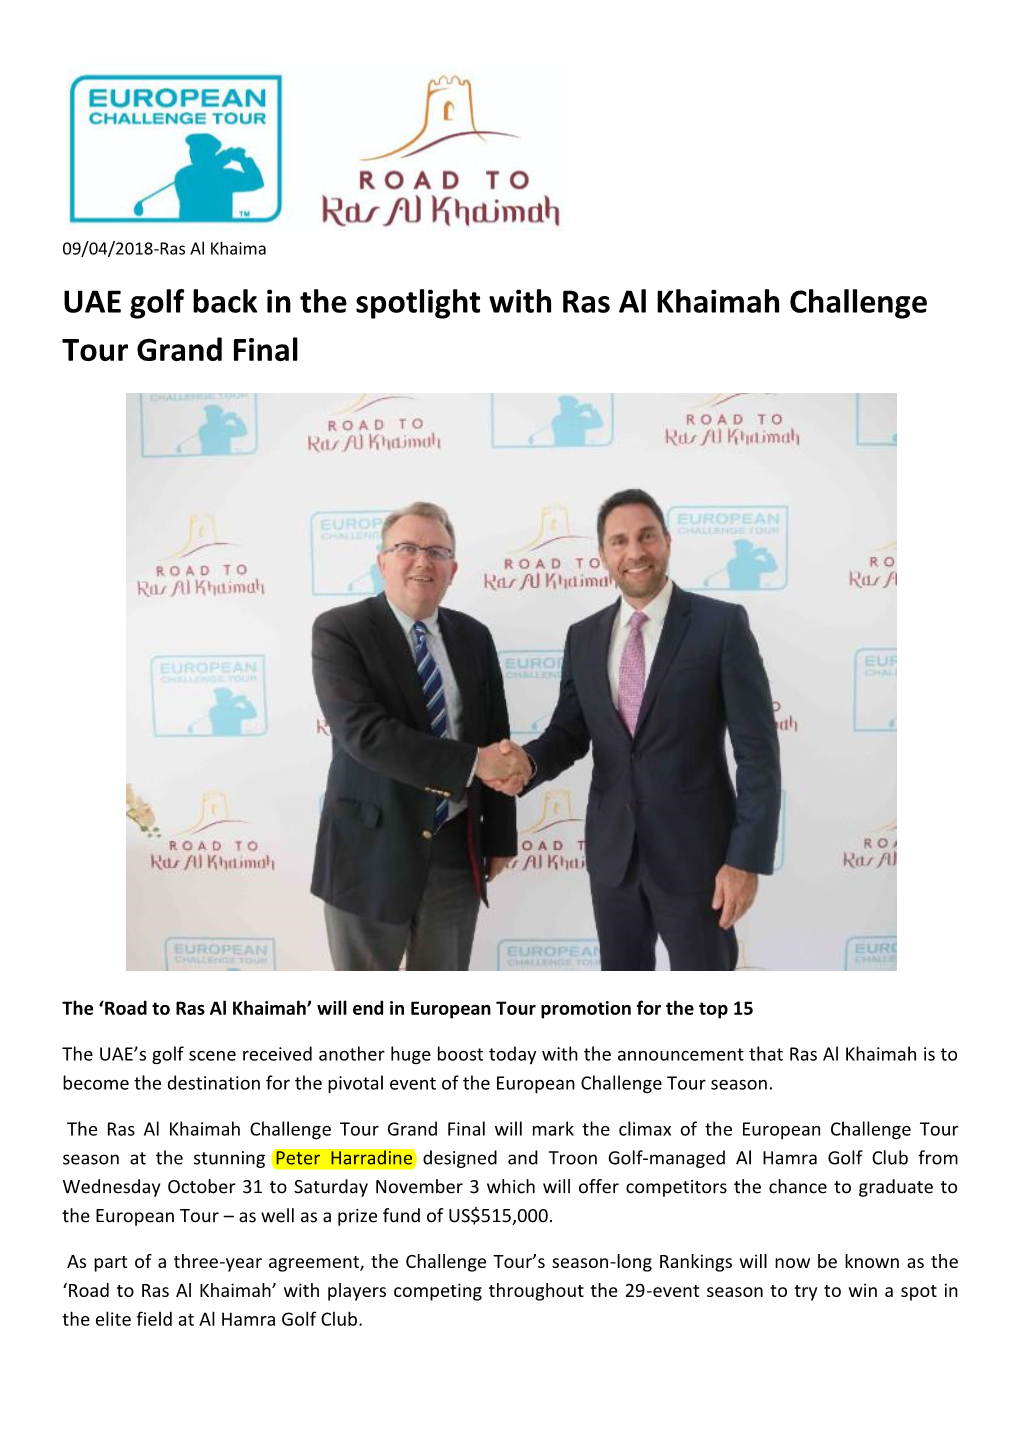 UAE Golf Back in the Spotlight with Ras Al Khaimah Challenge Tour Grand Final